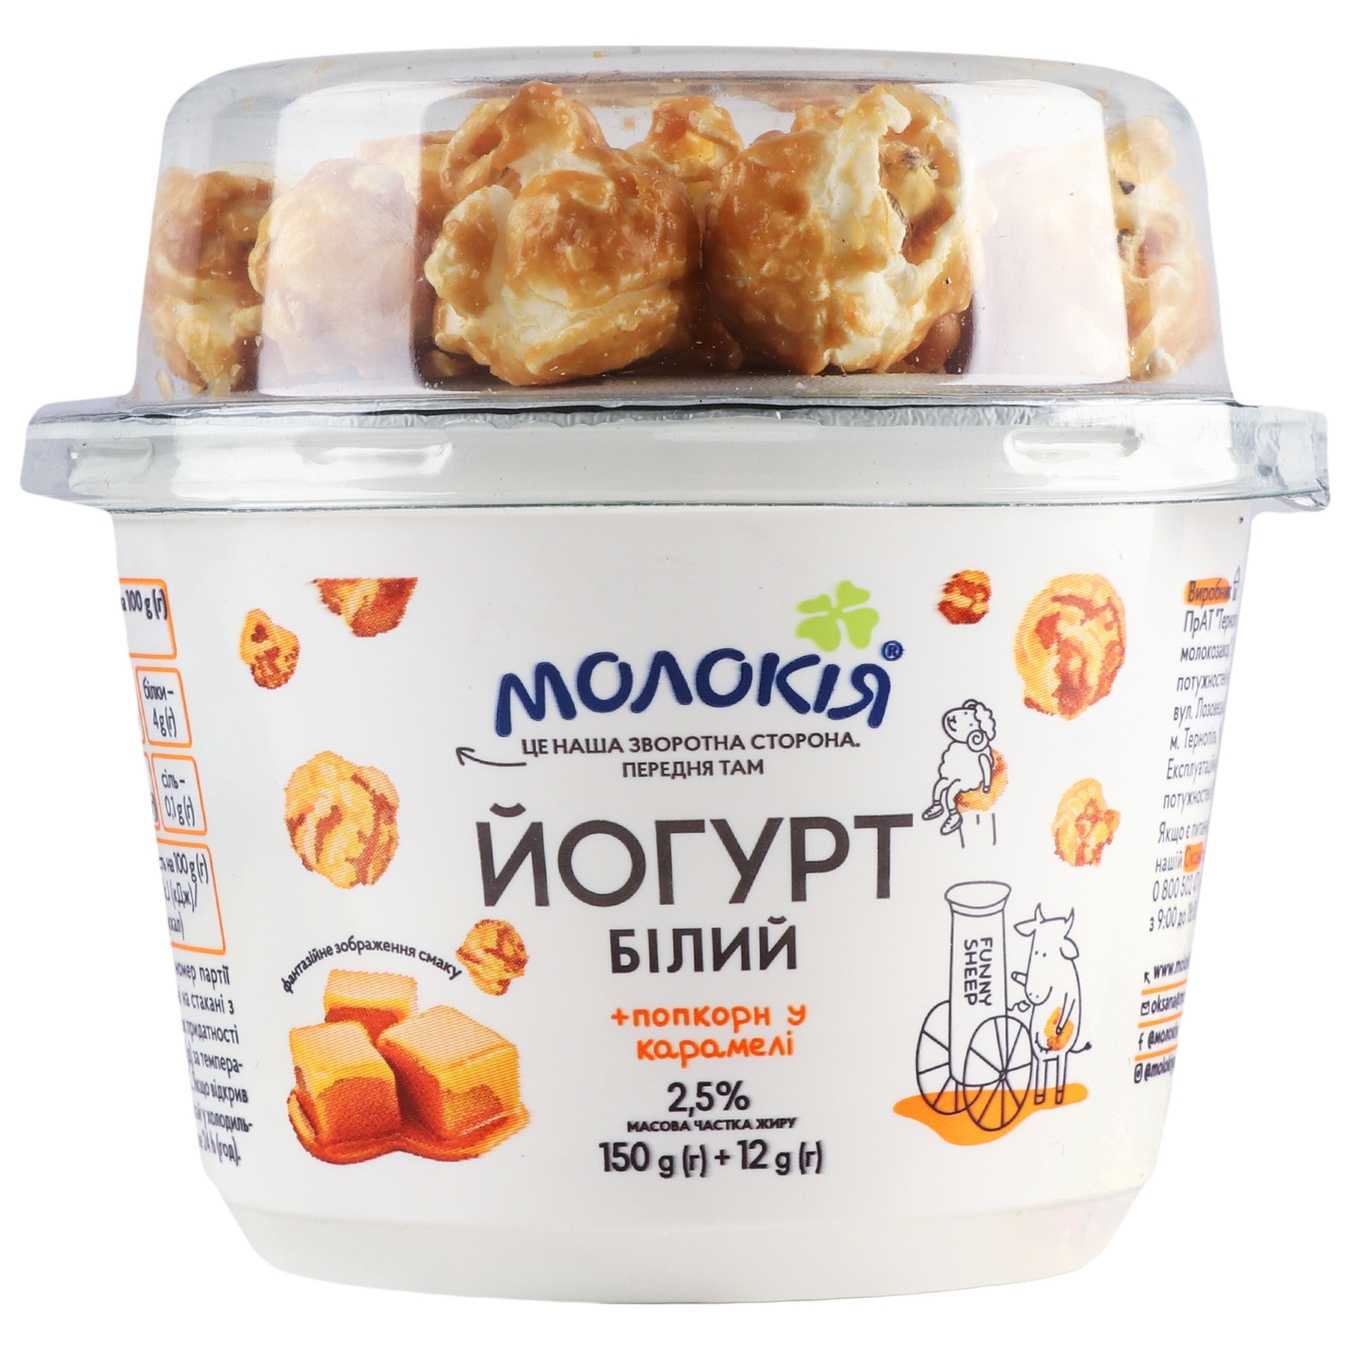 Molokia yogurt white with popcorn in caramel 2,5% 162g